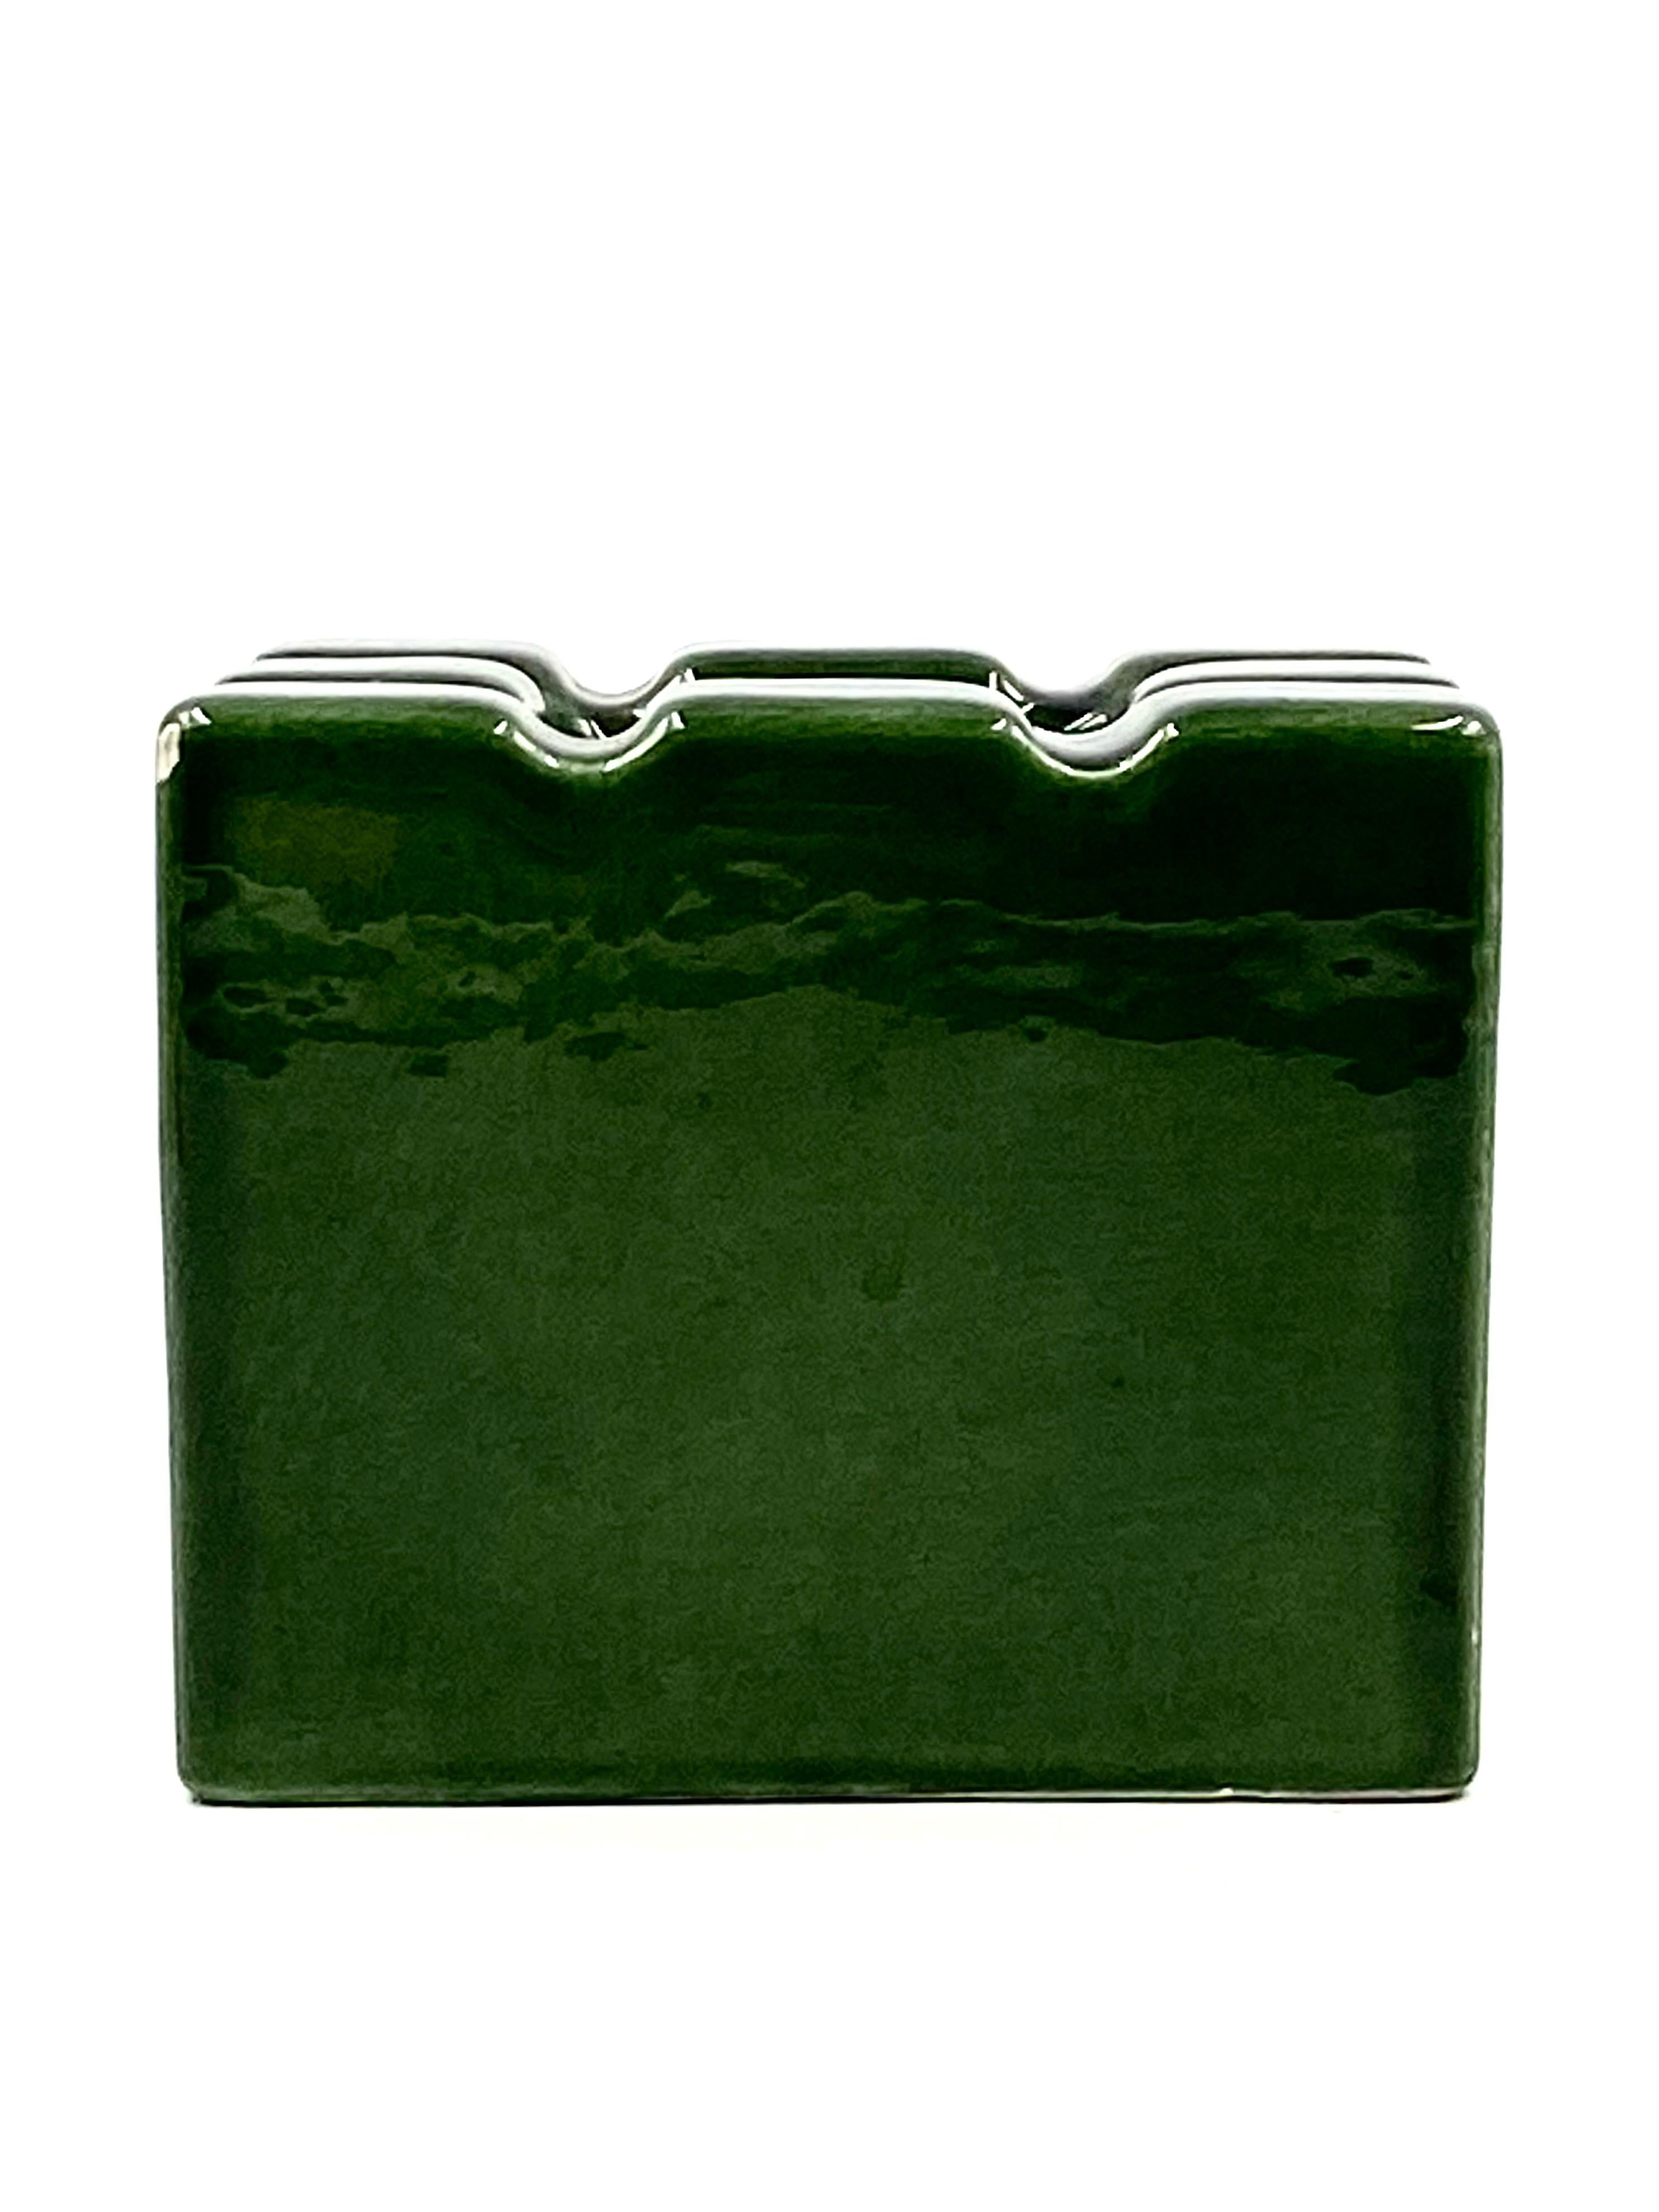 Green Cubic Glazed Ceramic Ashtray, Sicart, Italy, 1970s 4